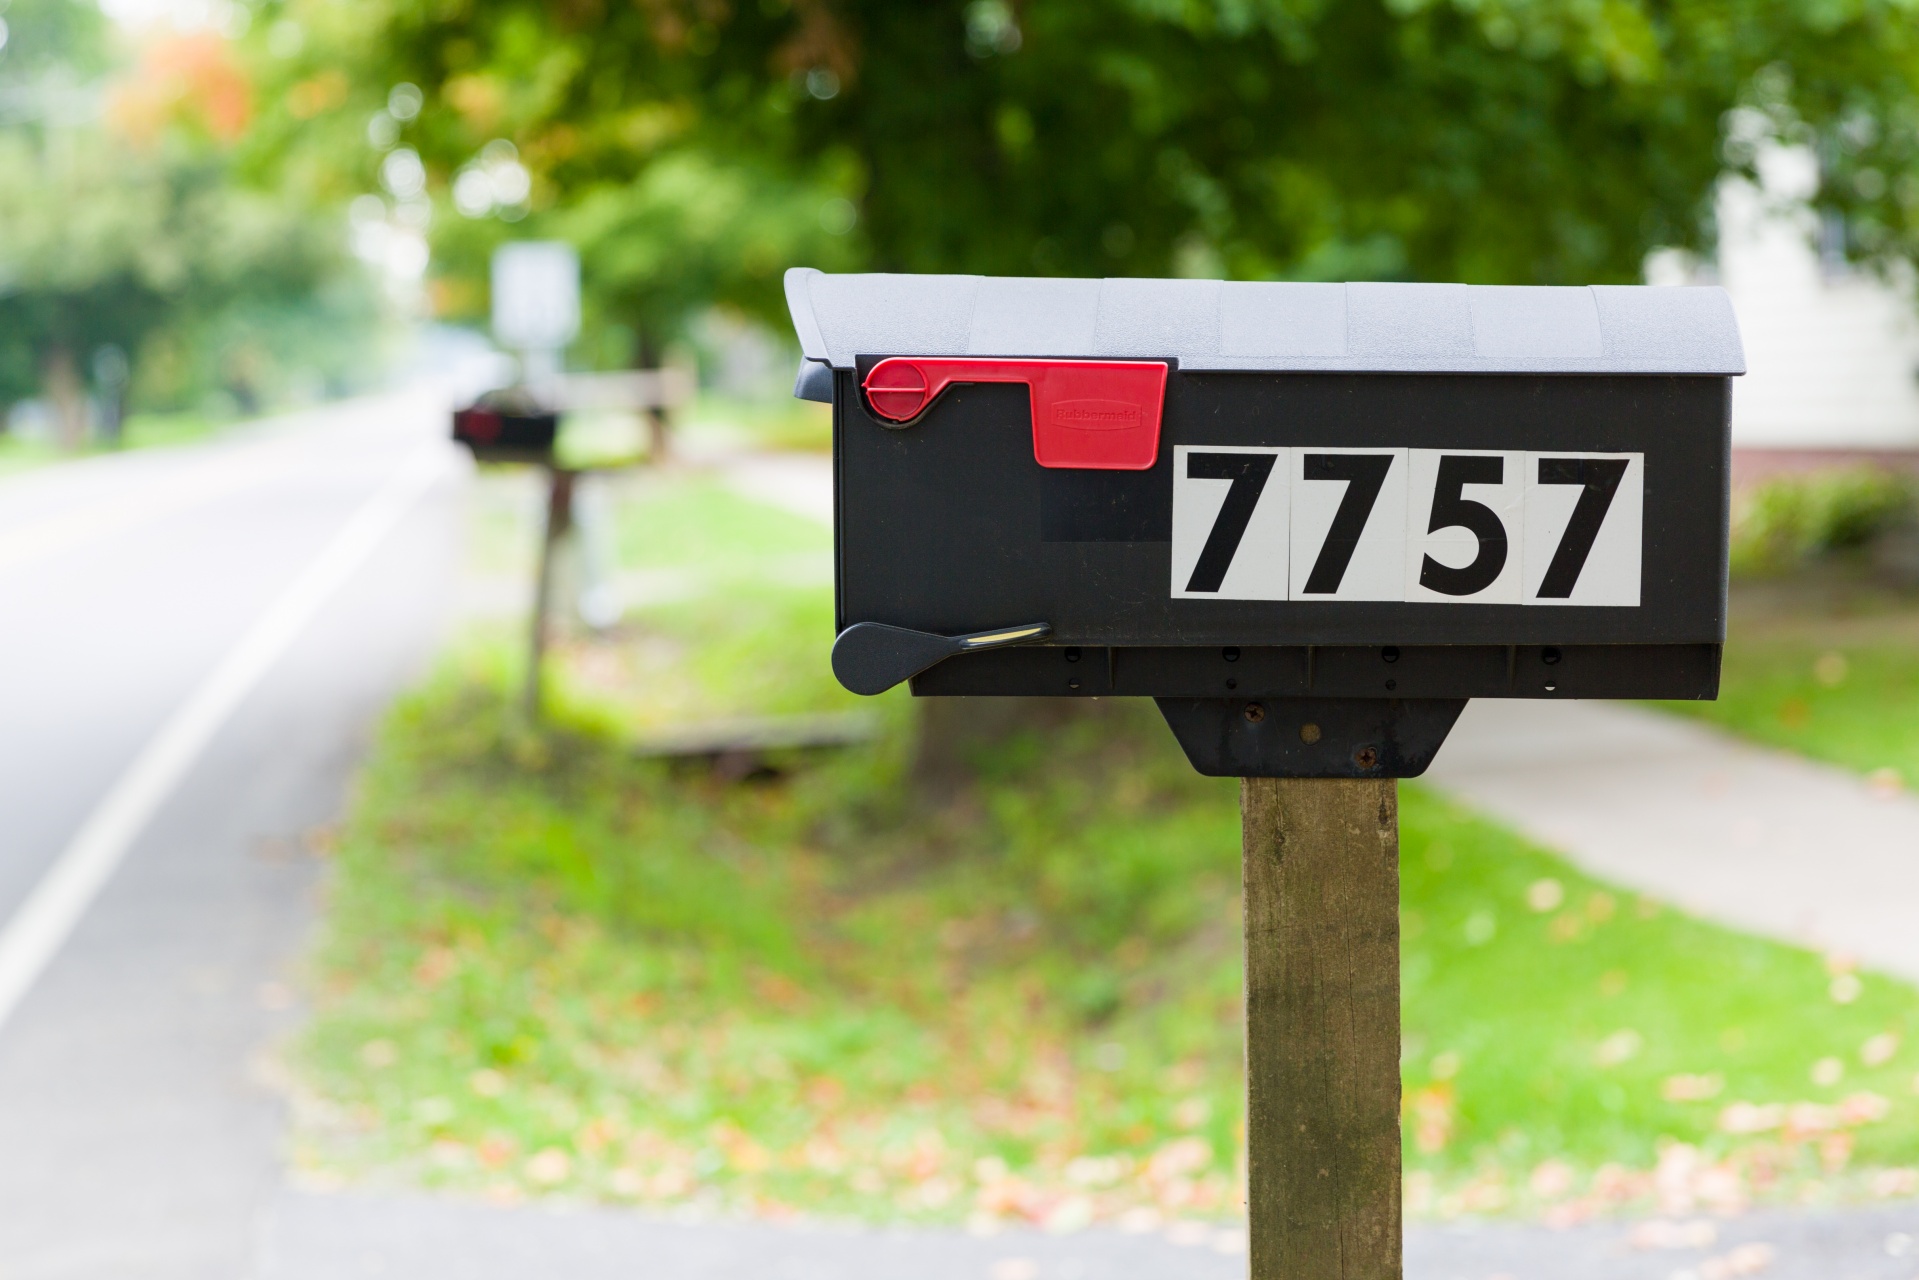 Mailing Address vs. Physical Address